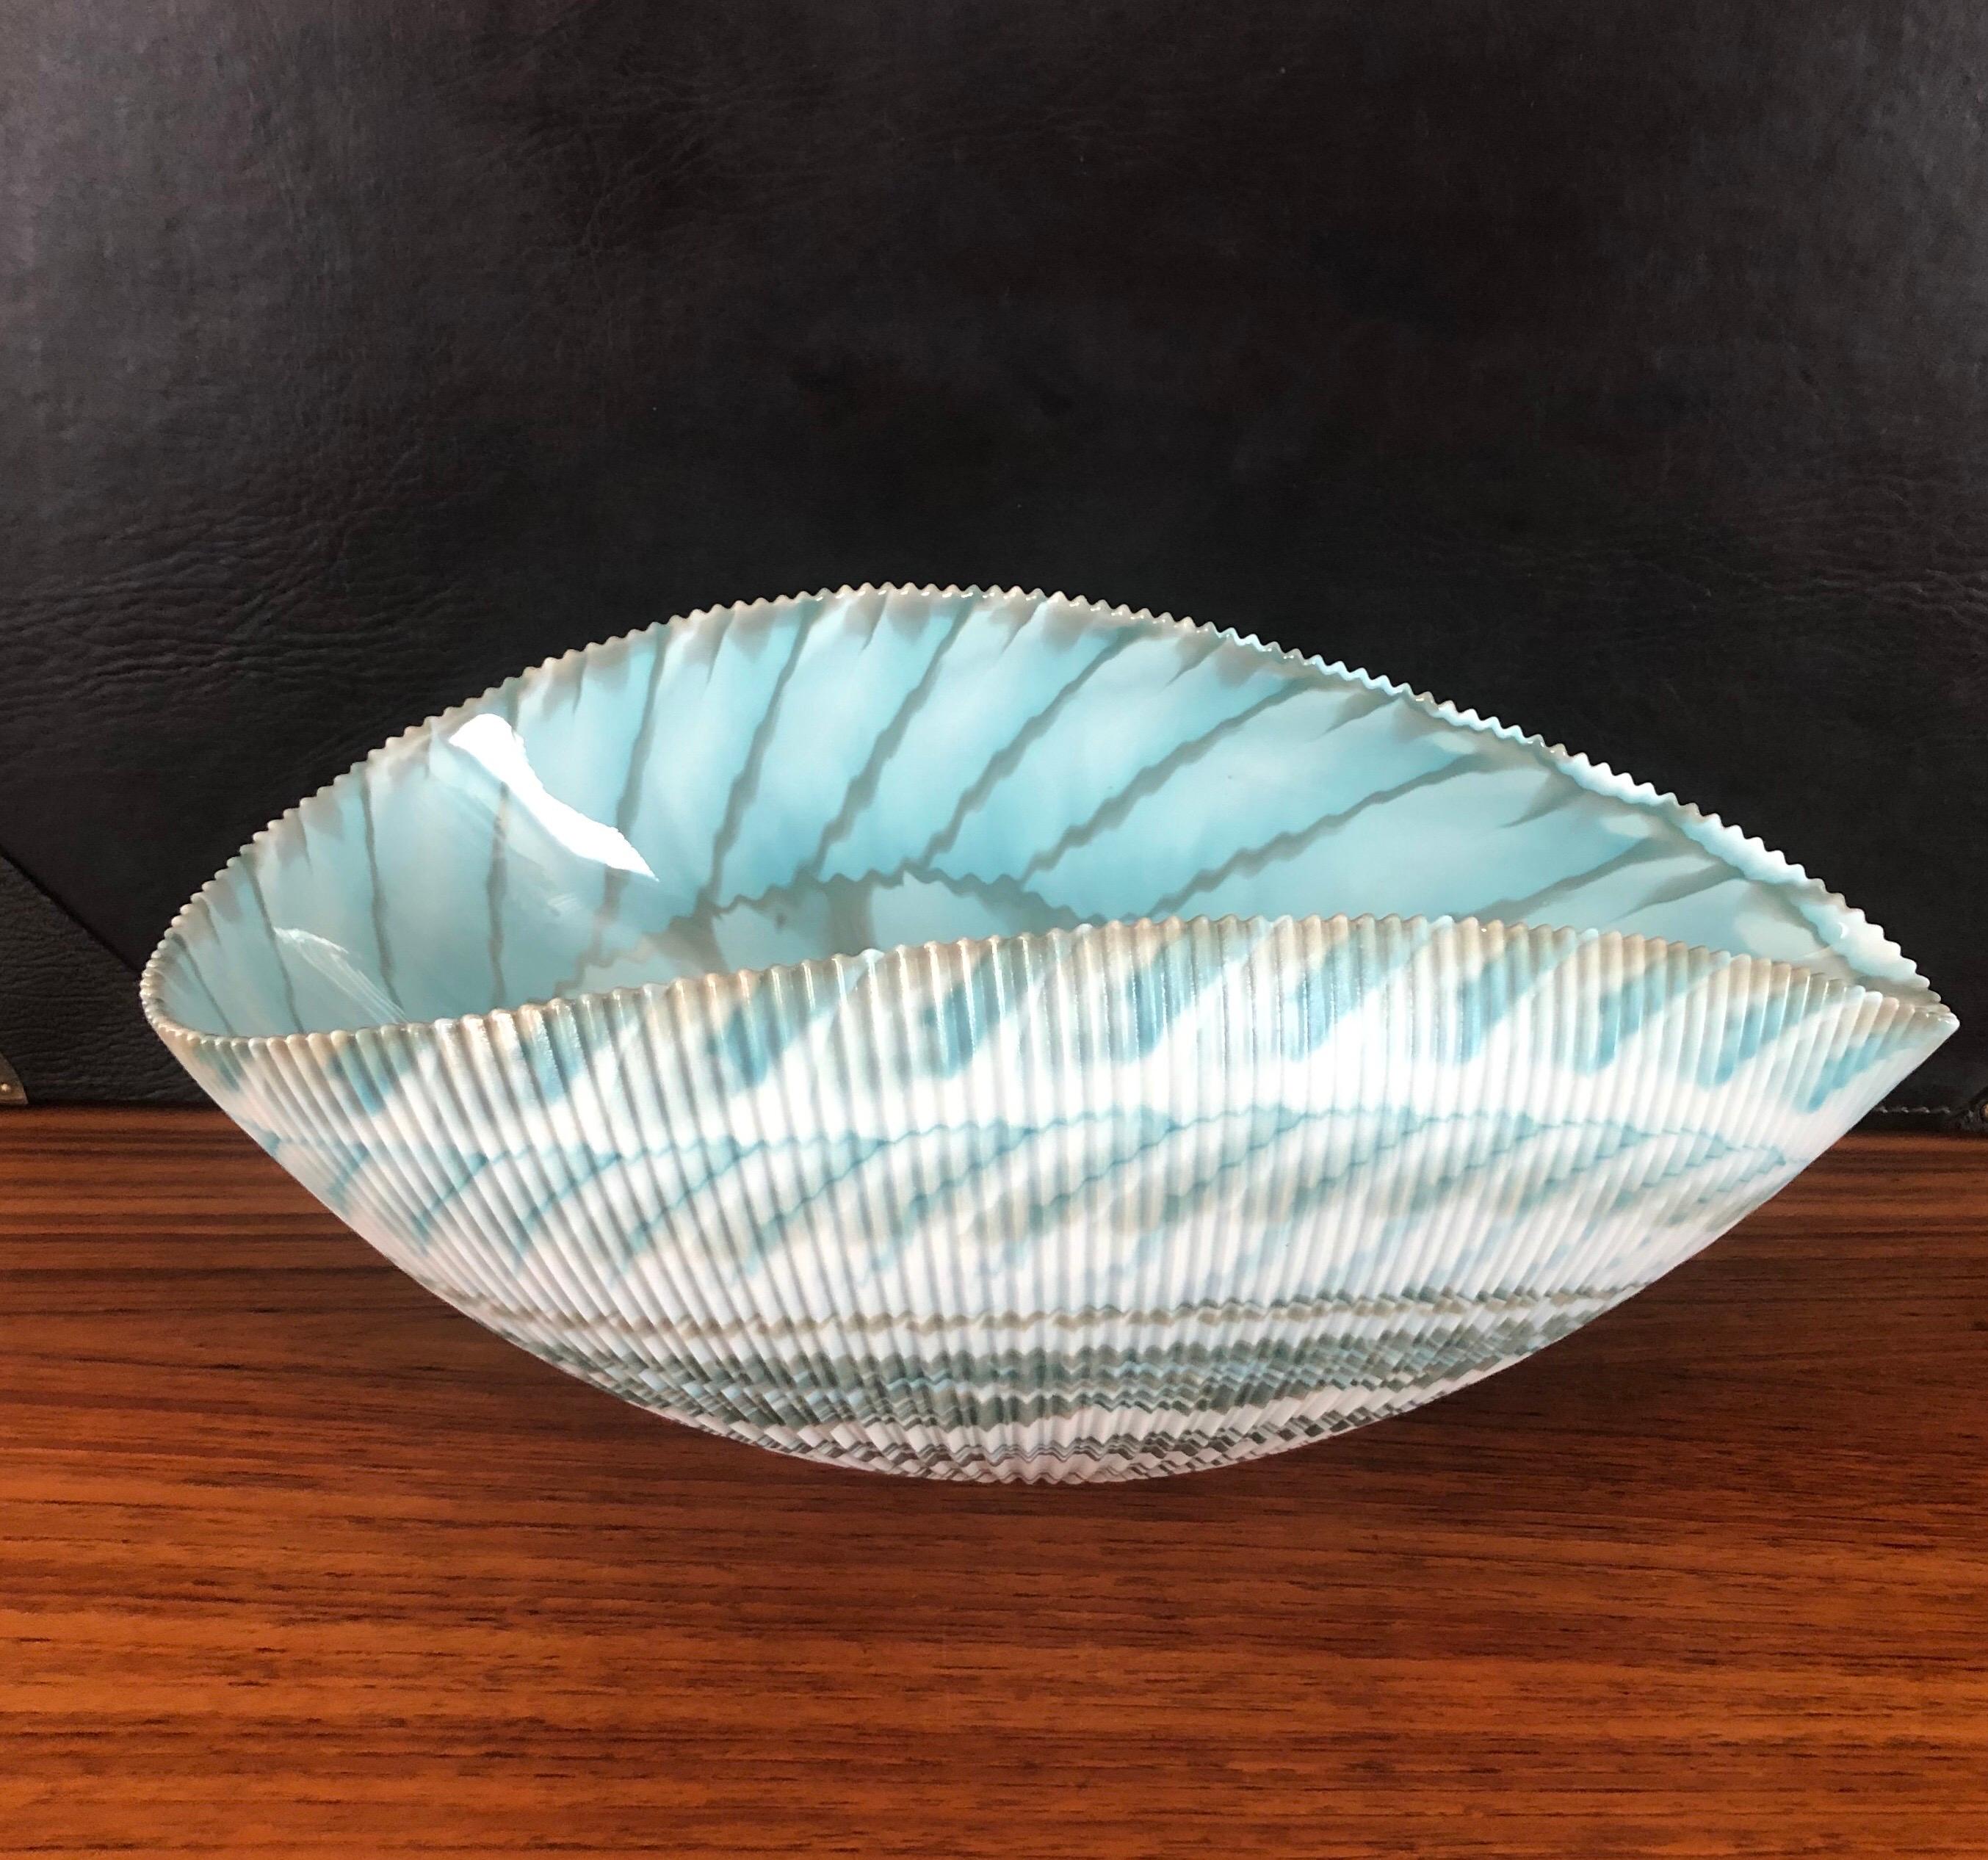 Large Seashell Shaped Centerpiece Bowl By Yalos For Murano Glass At 1stdibs Yalos Murano